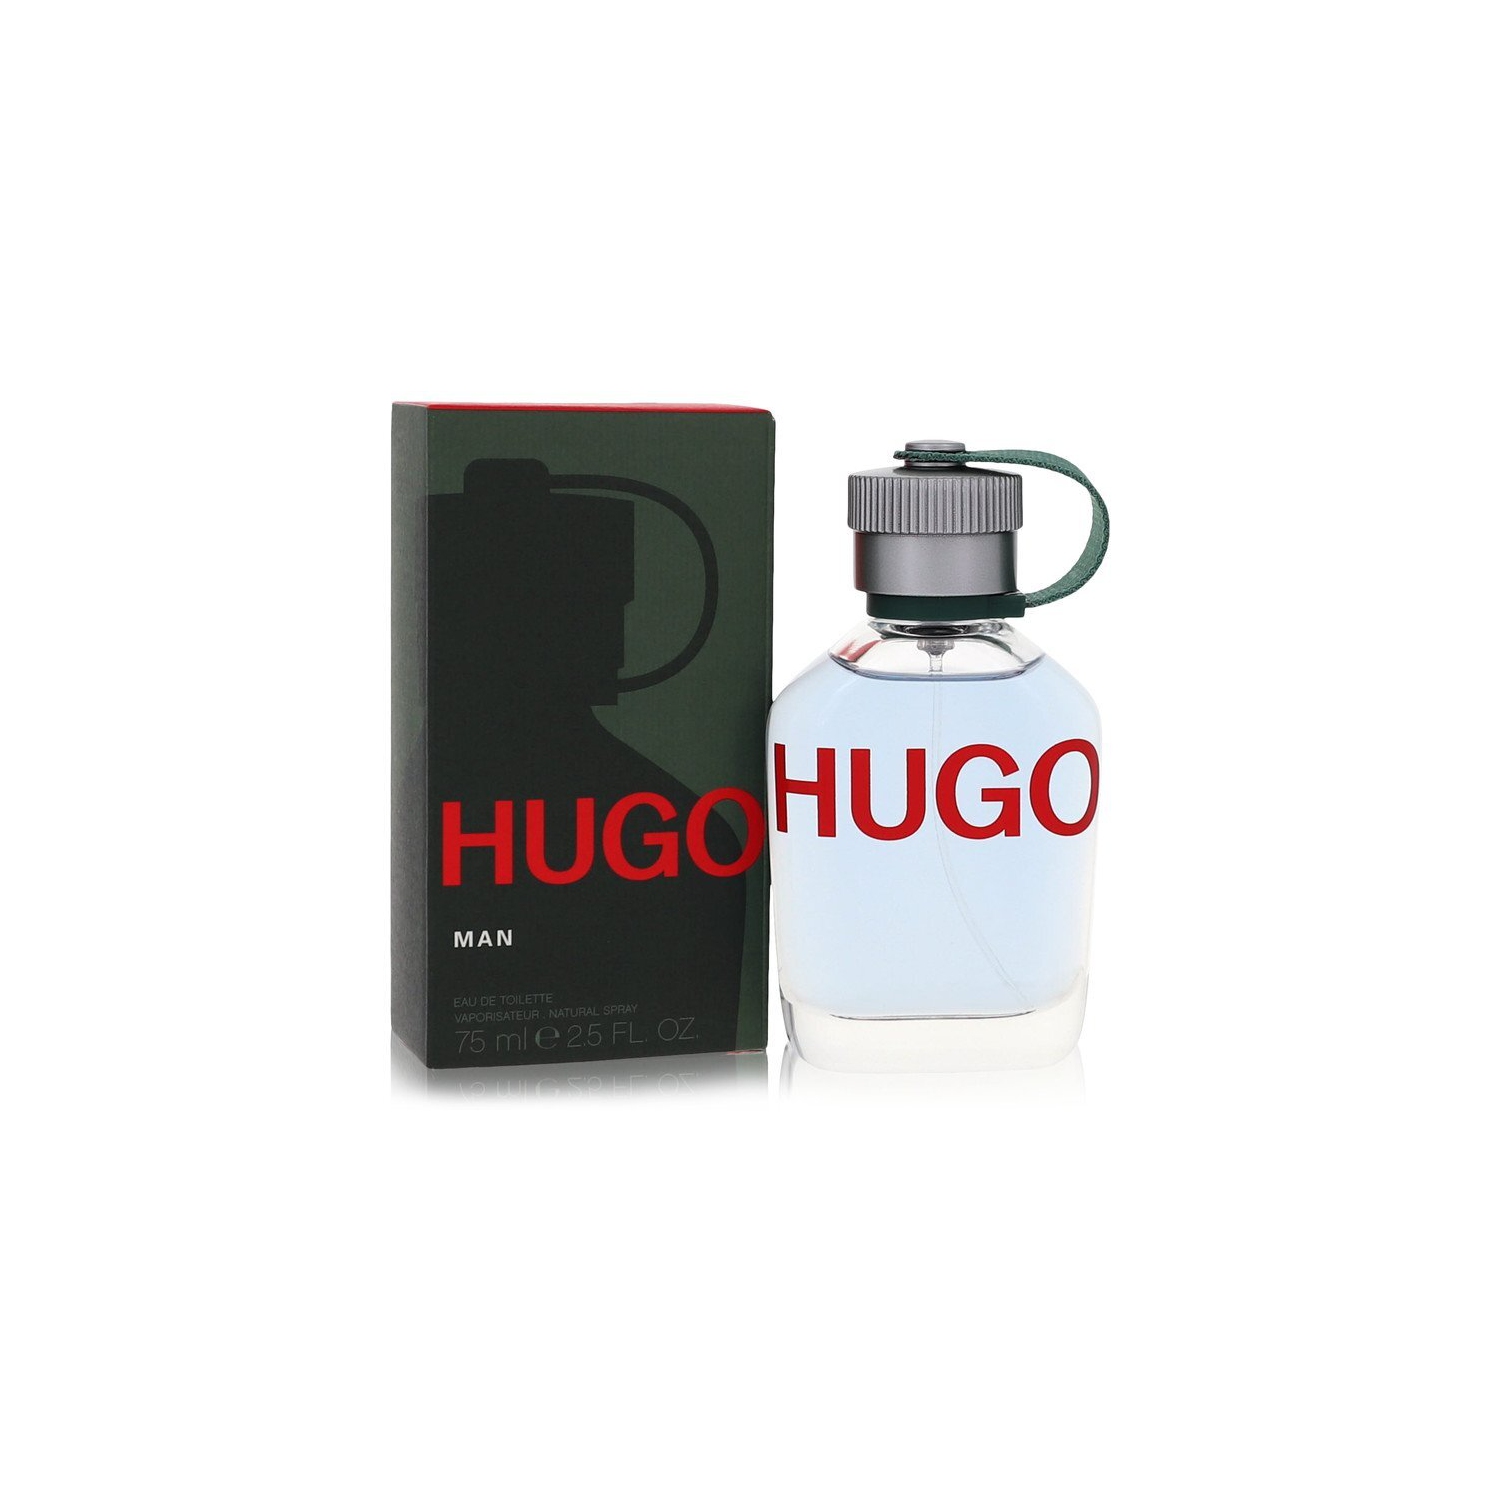 HUGO by Hugo Boss Eau De Toilette Spray 2.5 oz (Men)